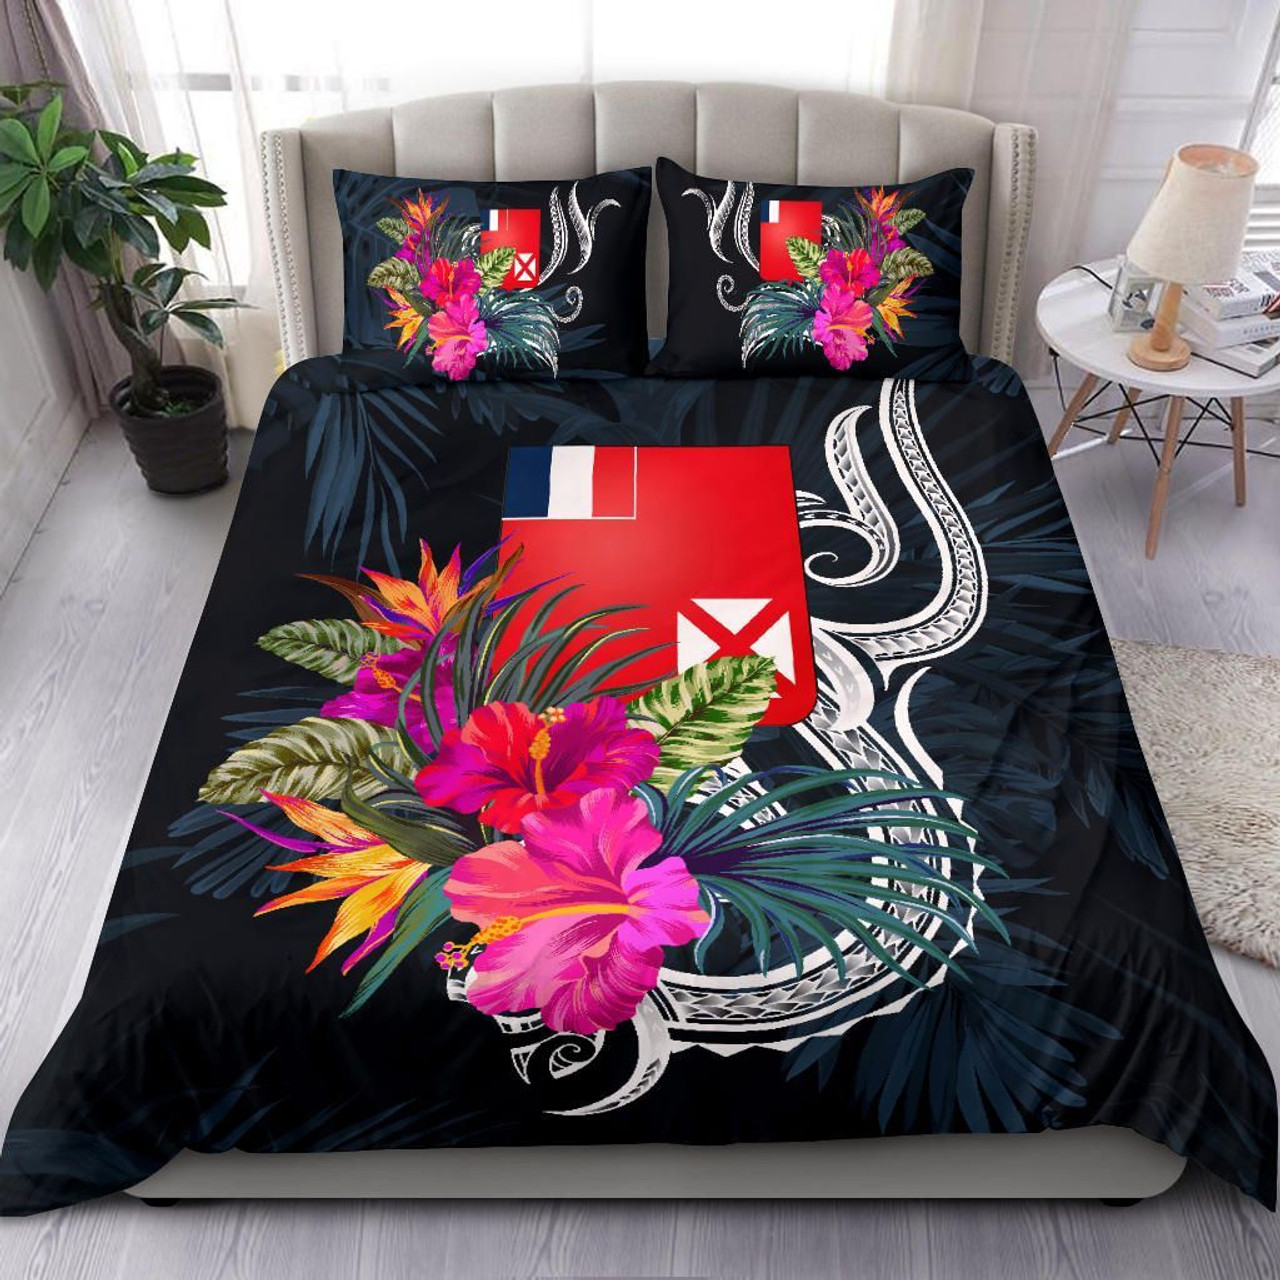 Polynesian Bedding Set - Wallis And Futuna Duvet Cover Set Tropical Flowers 2